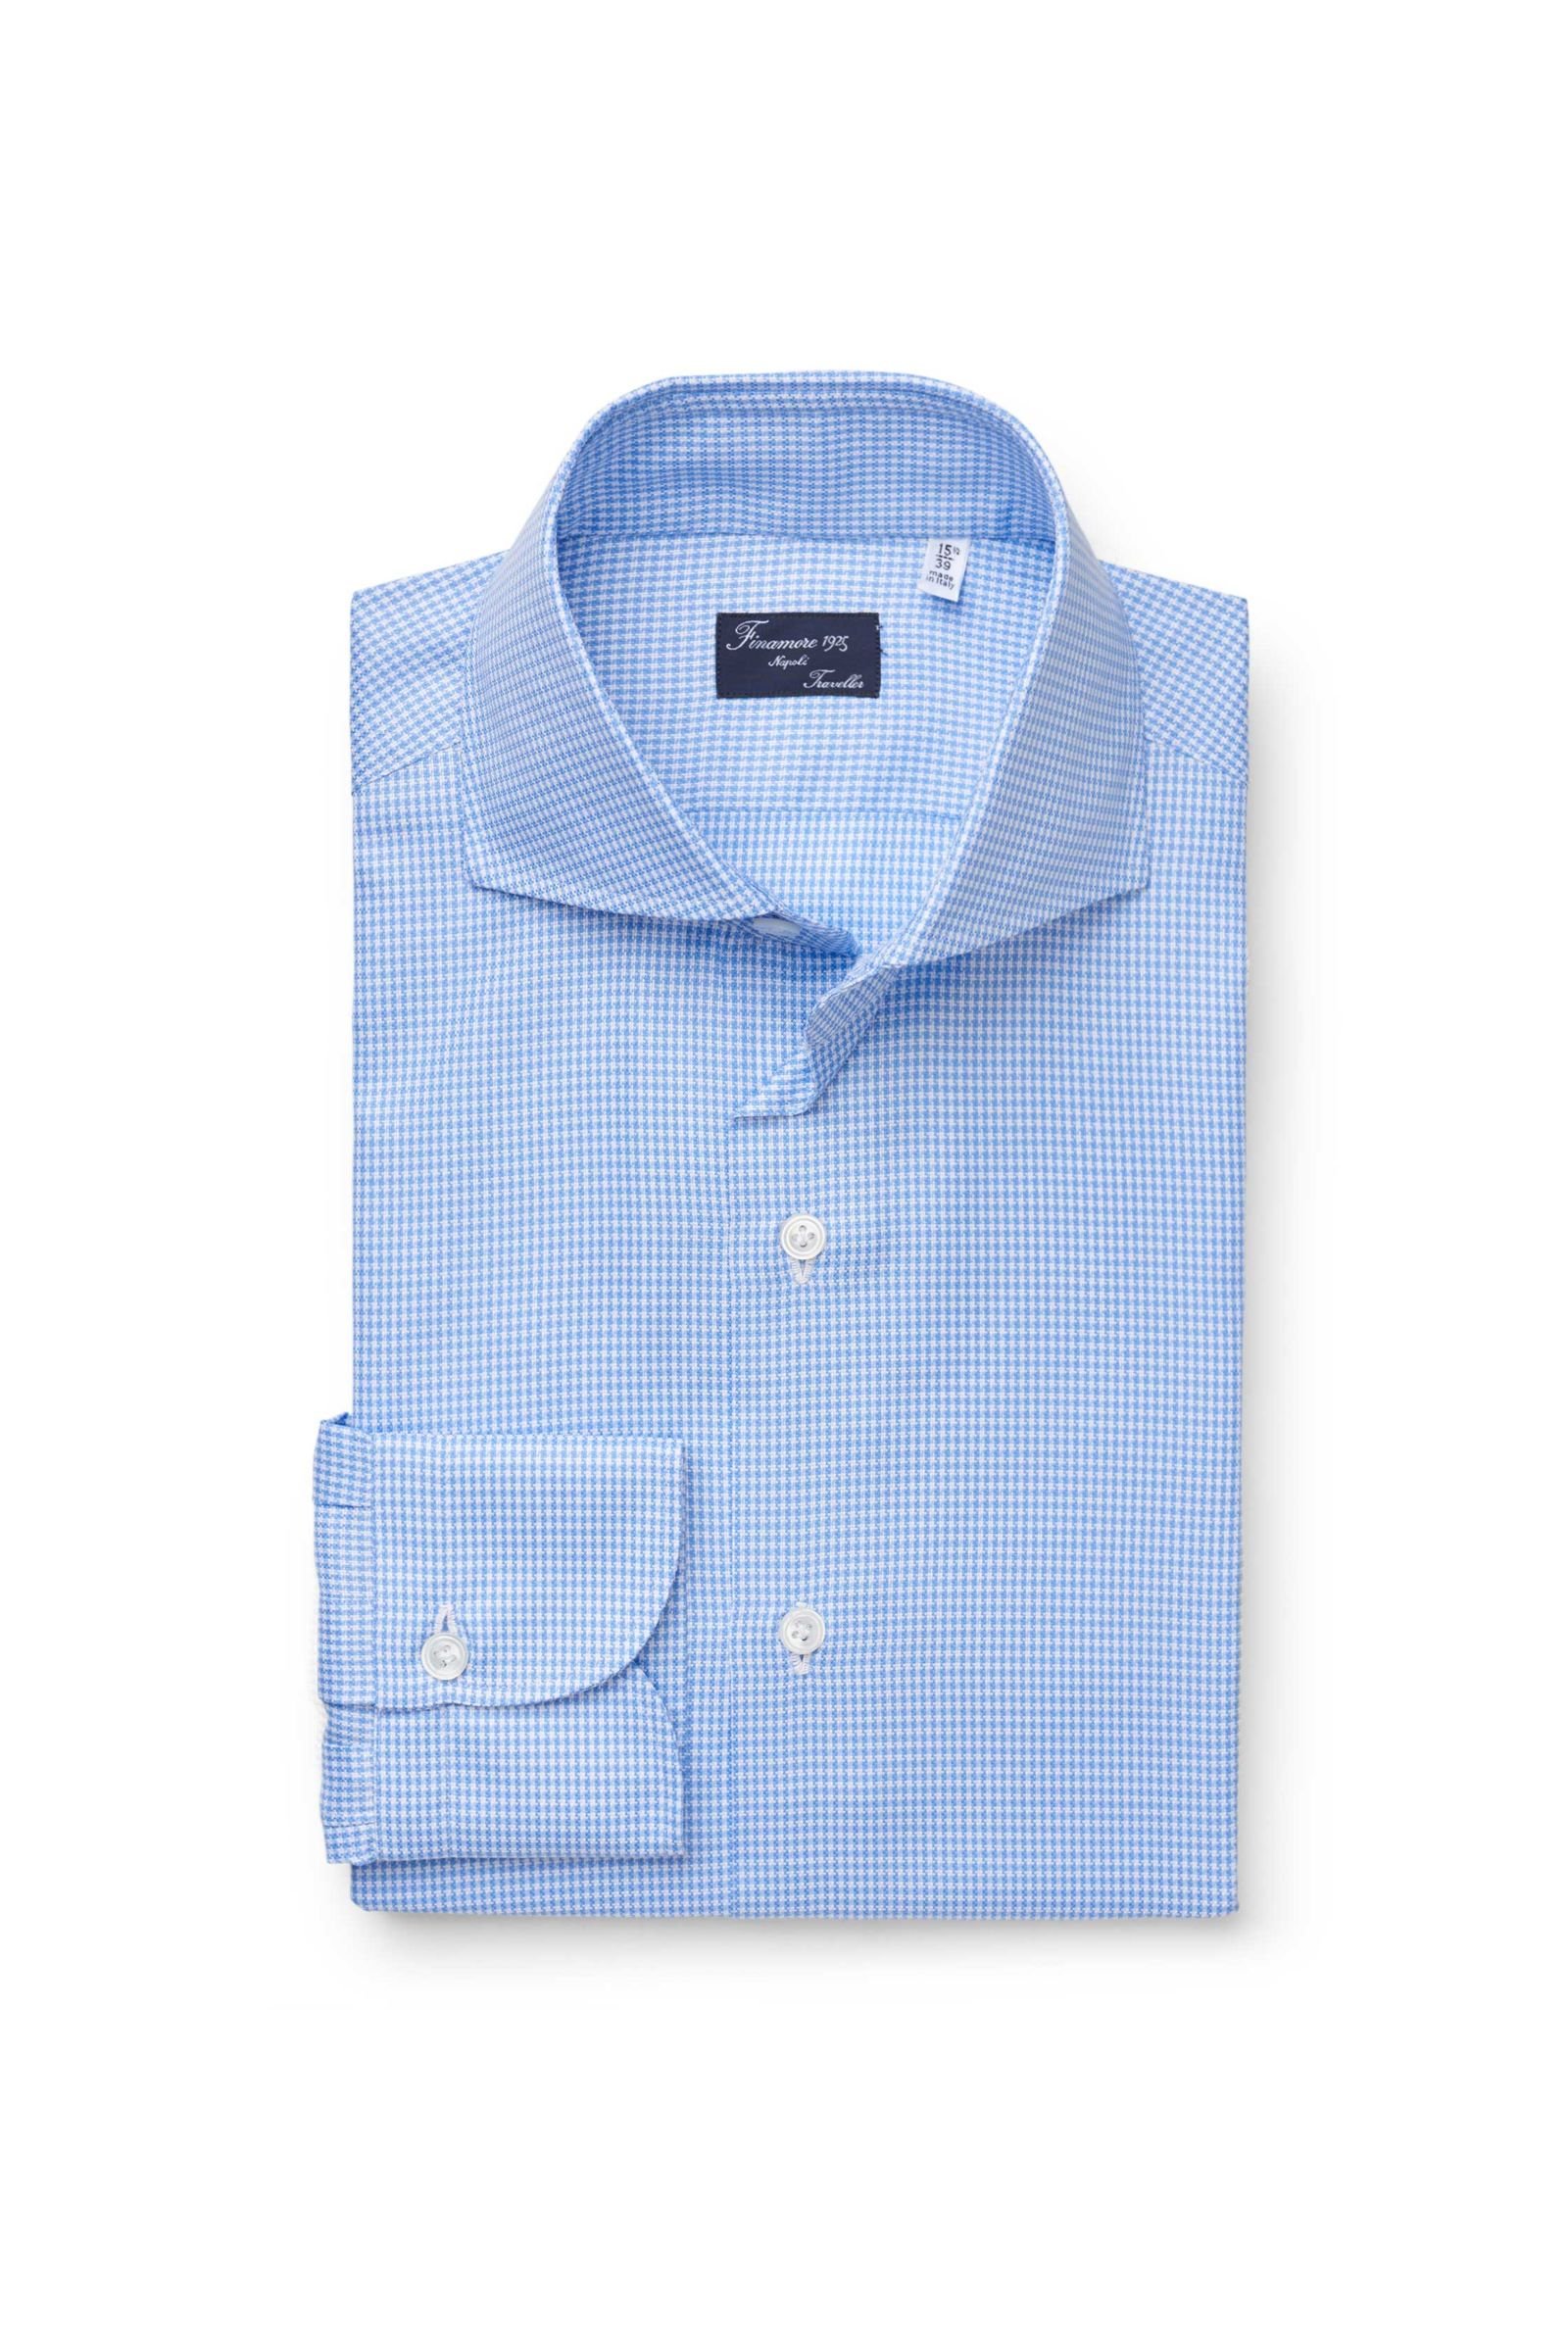 Oxford shirt 'Eduardo Napoli' shark collar light blue checked